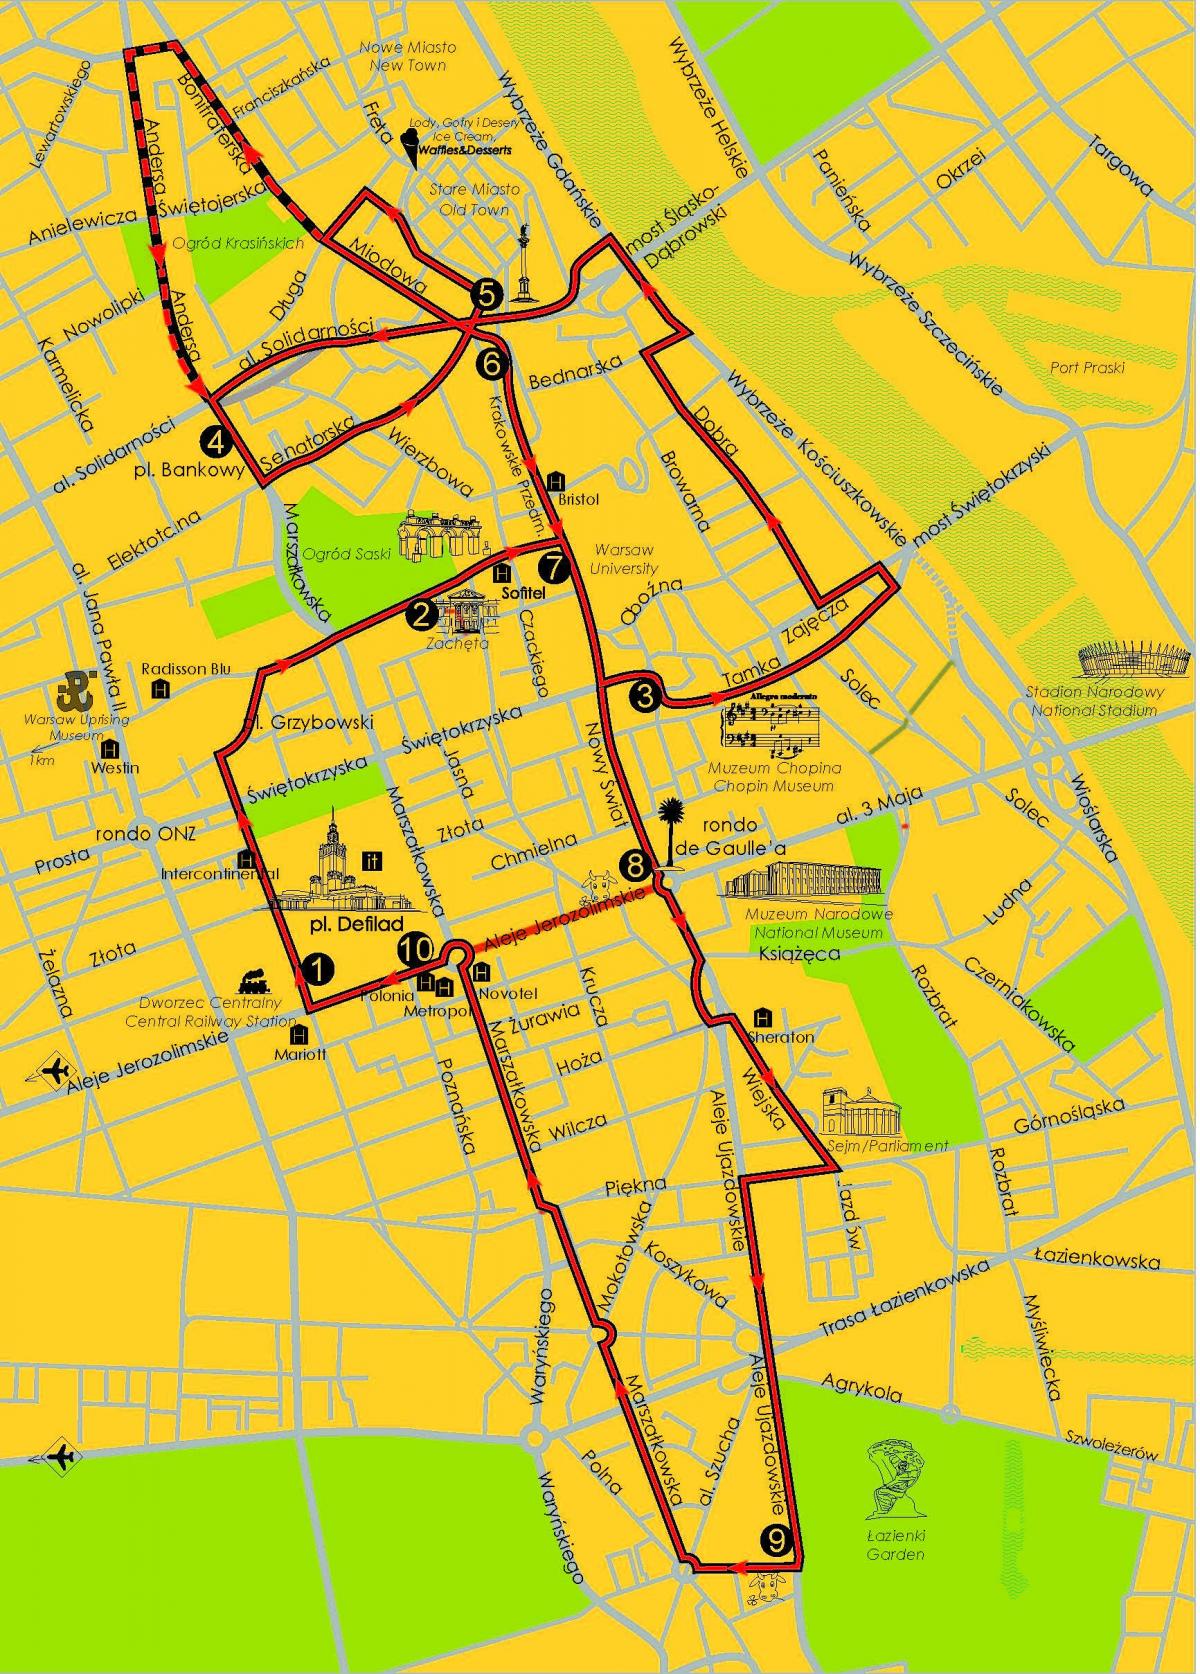 Mappa di Varsavia hop on hop off bus 